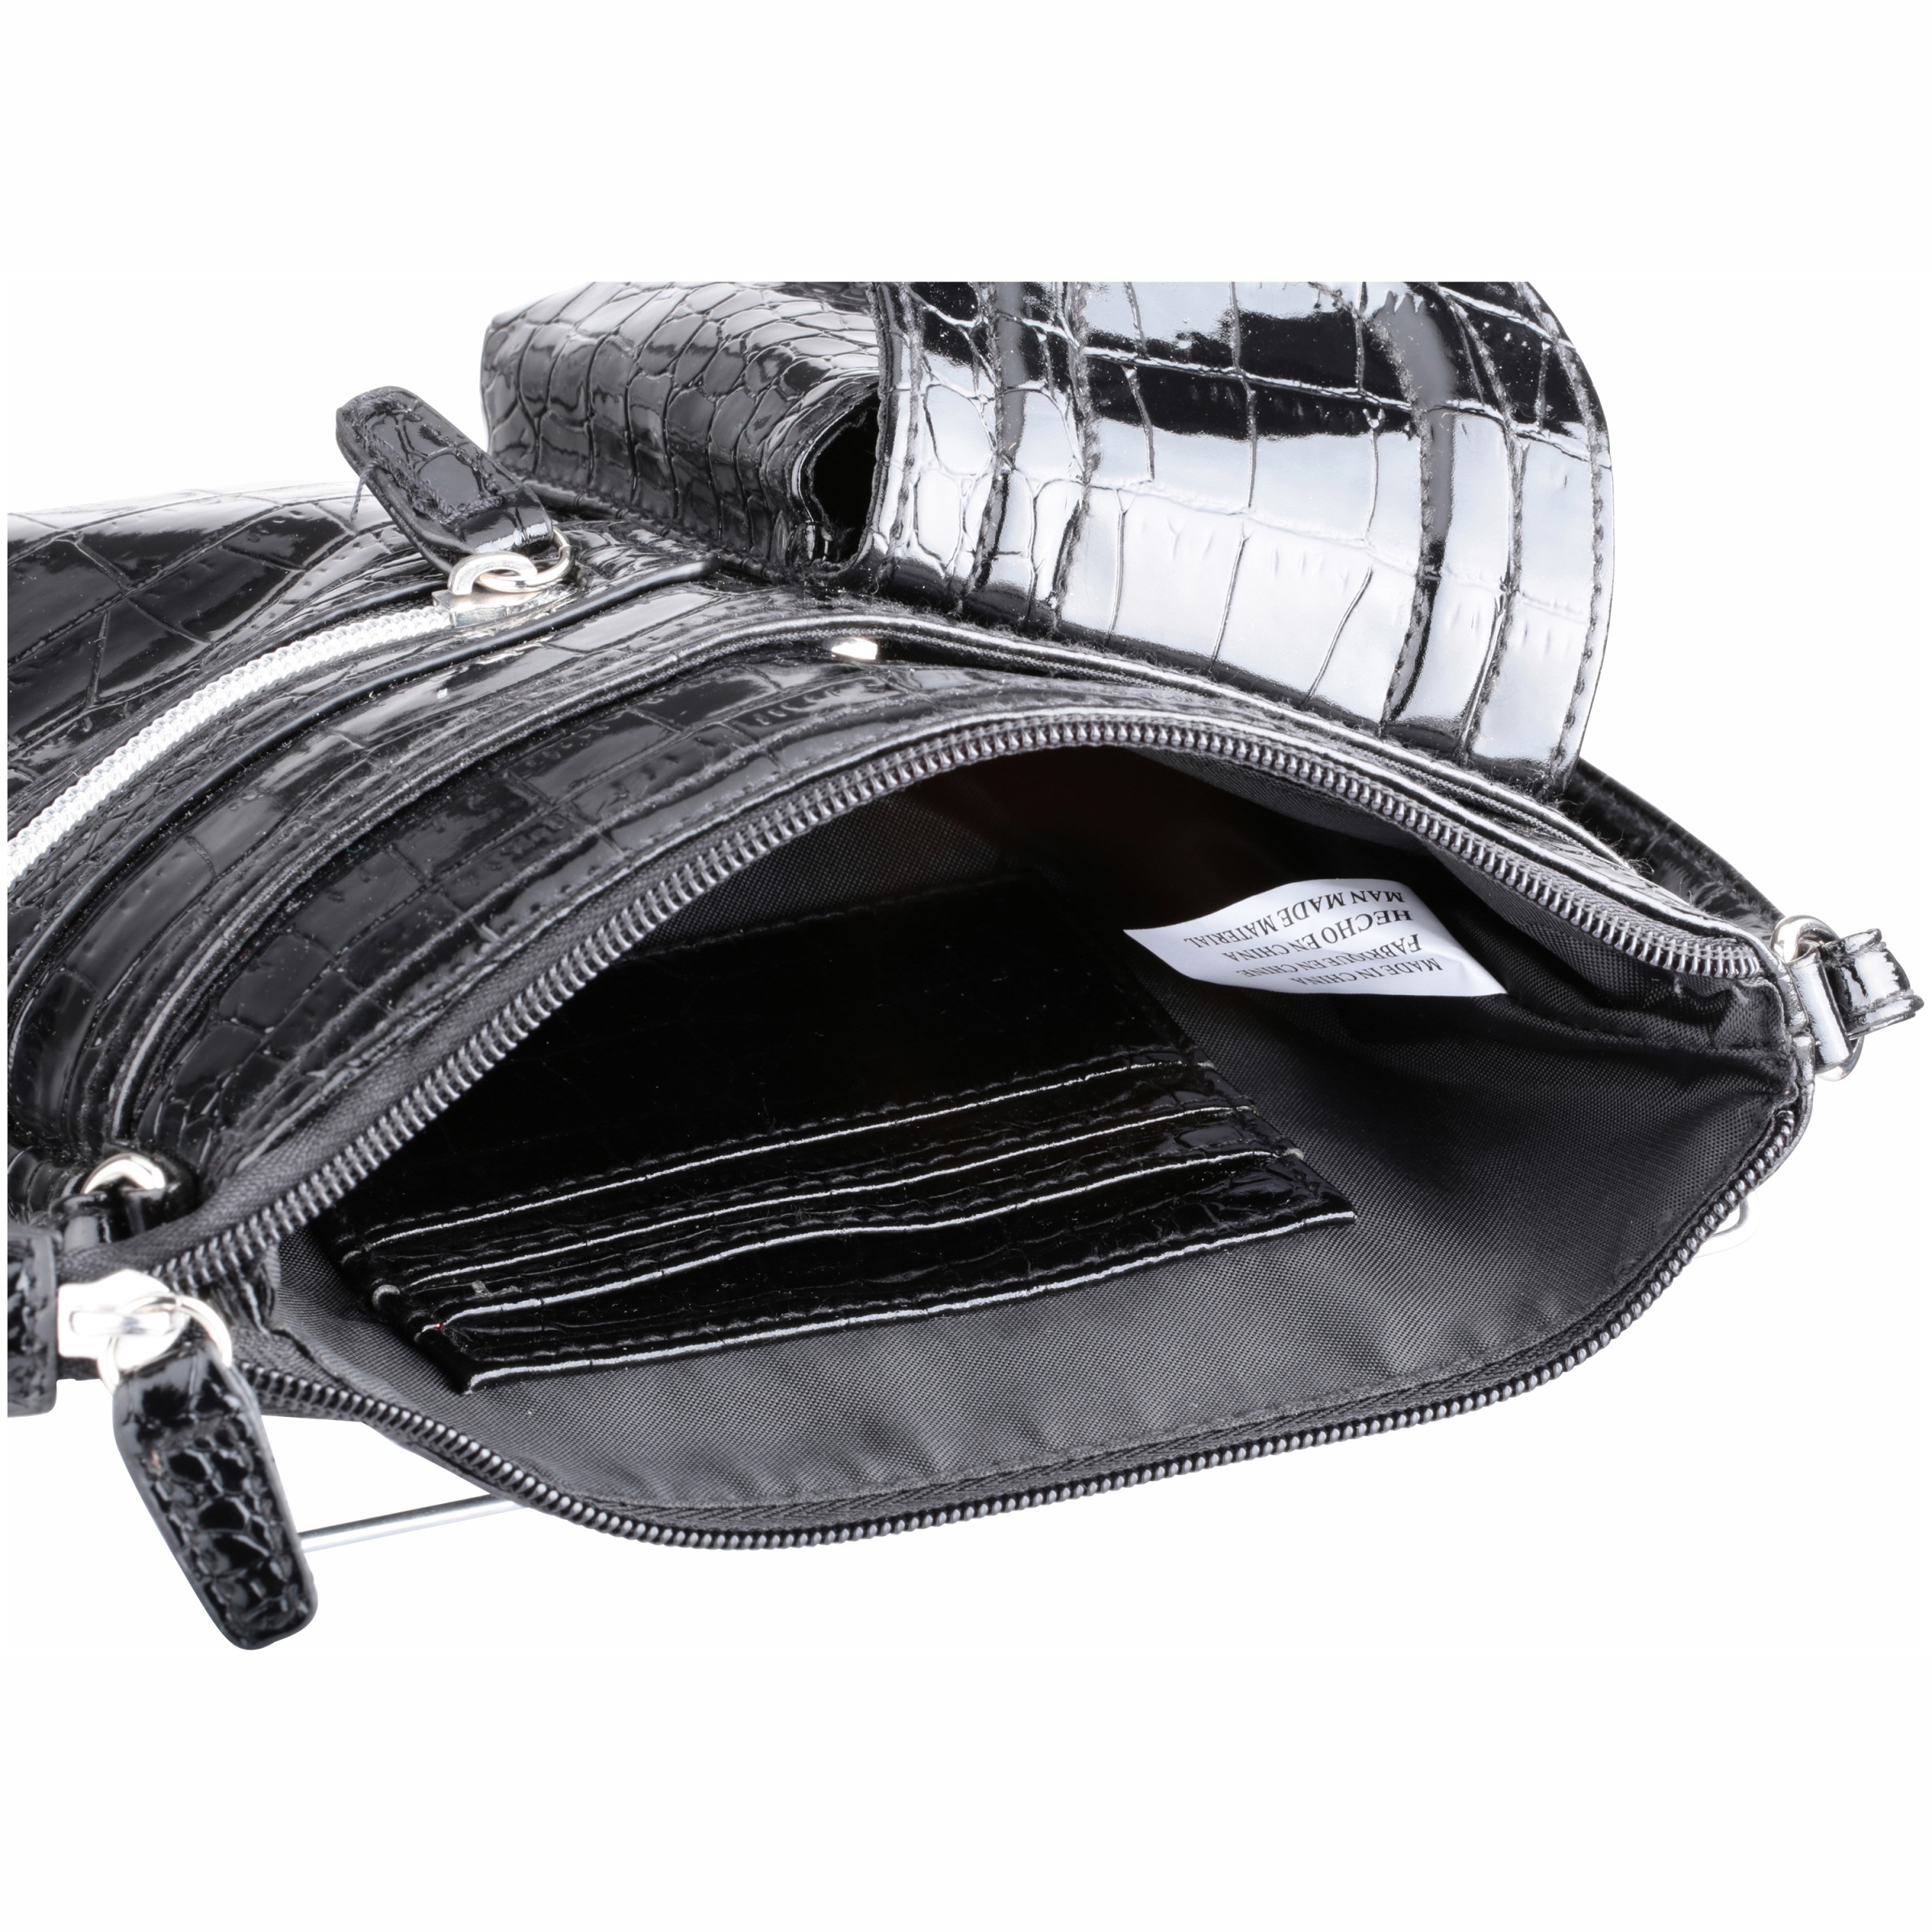 George® Shiny Black Handbag - image 3 of 5